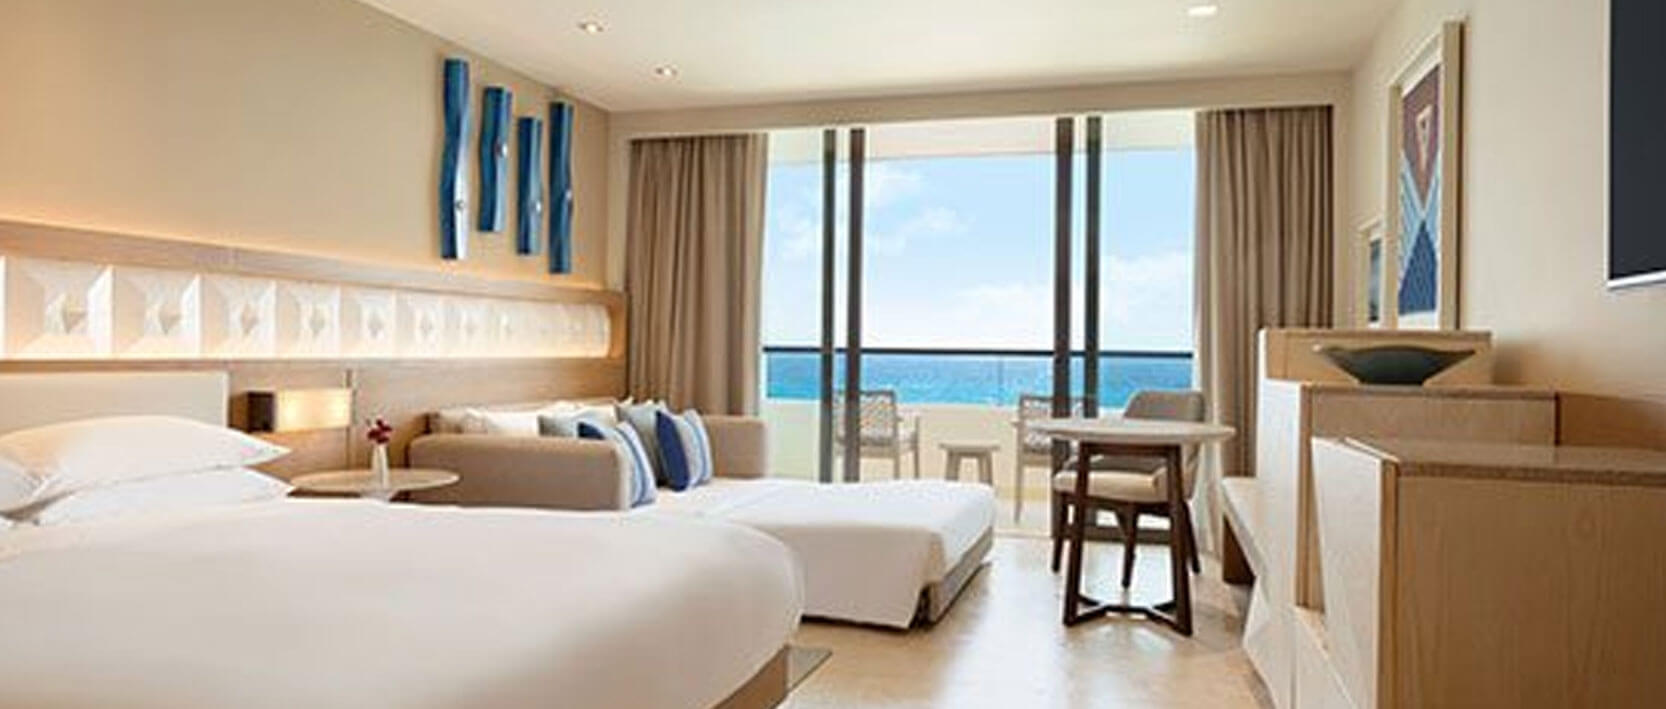 Hyatt Ziva Cancun Accommodations - Ocean View Swim Up Suite King